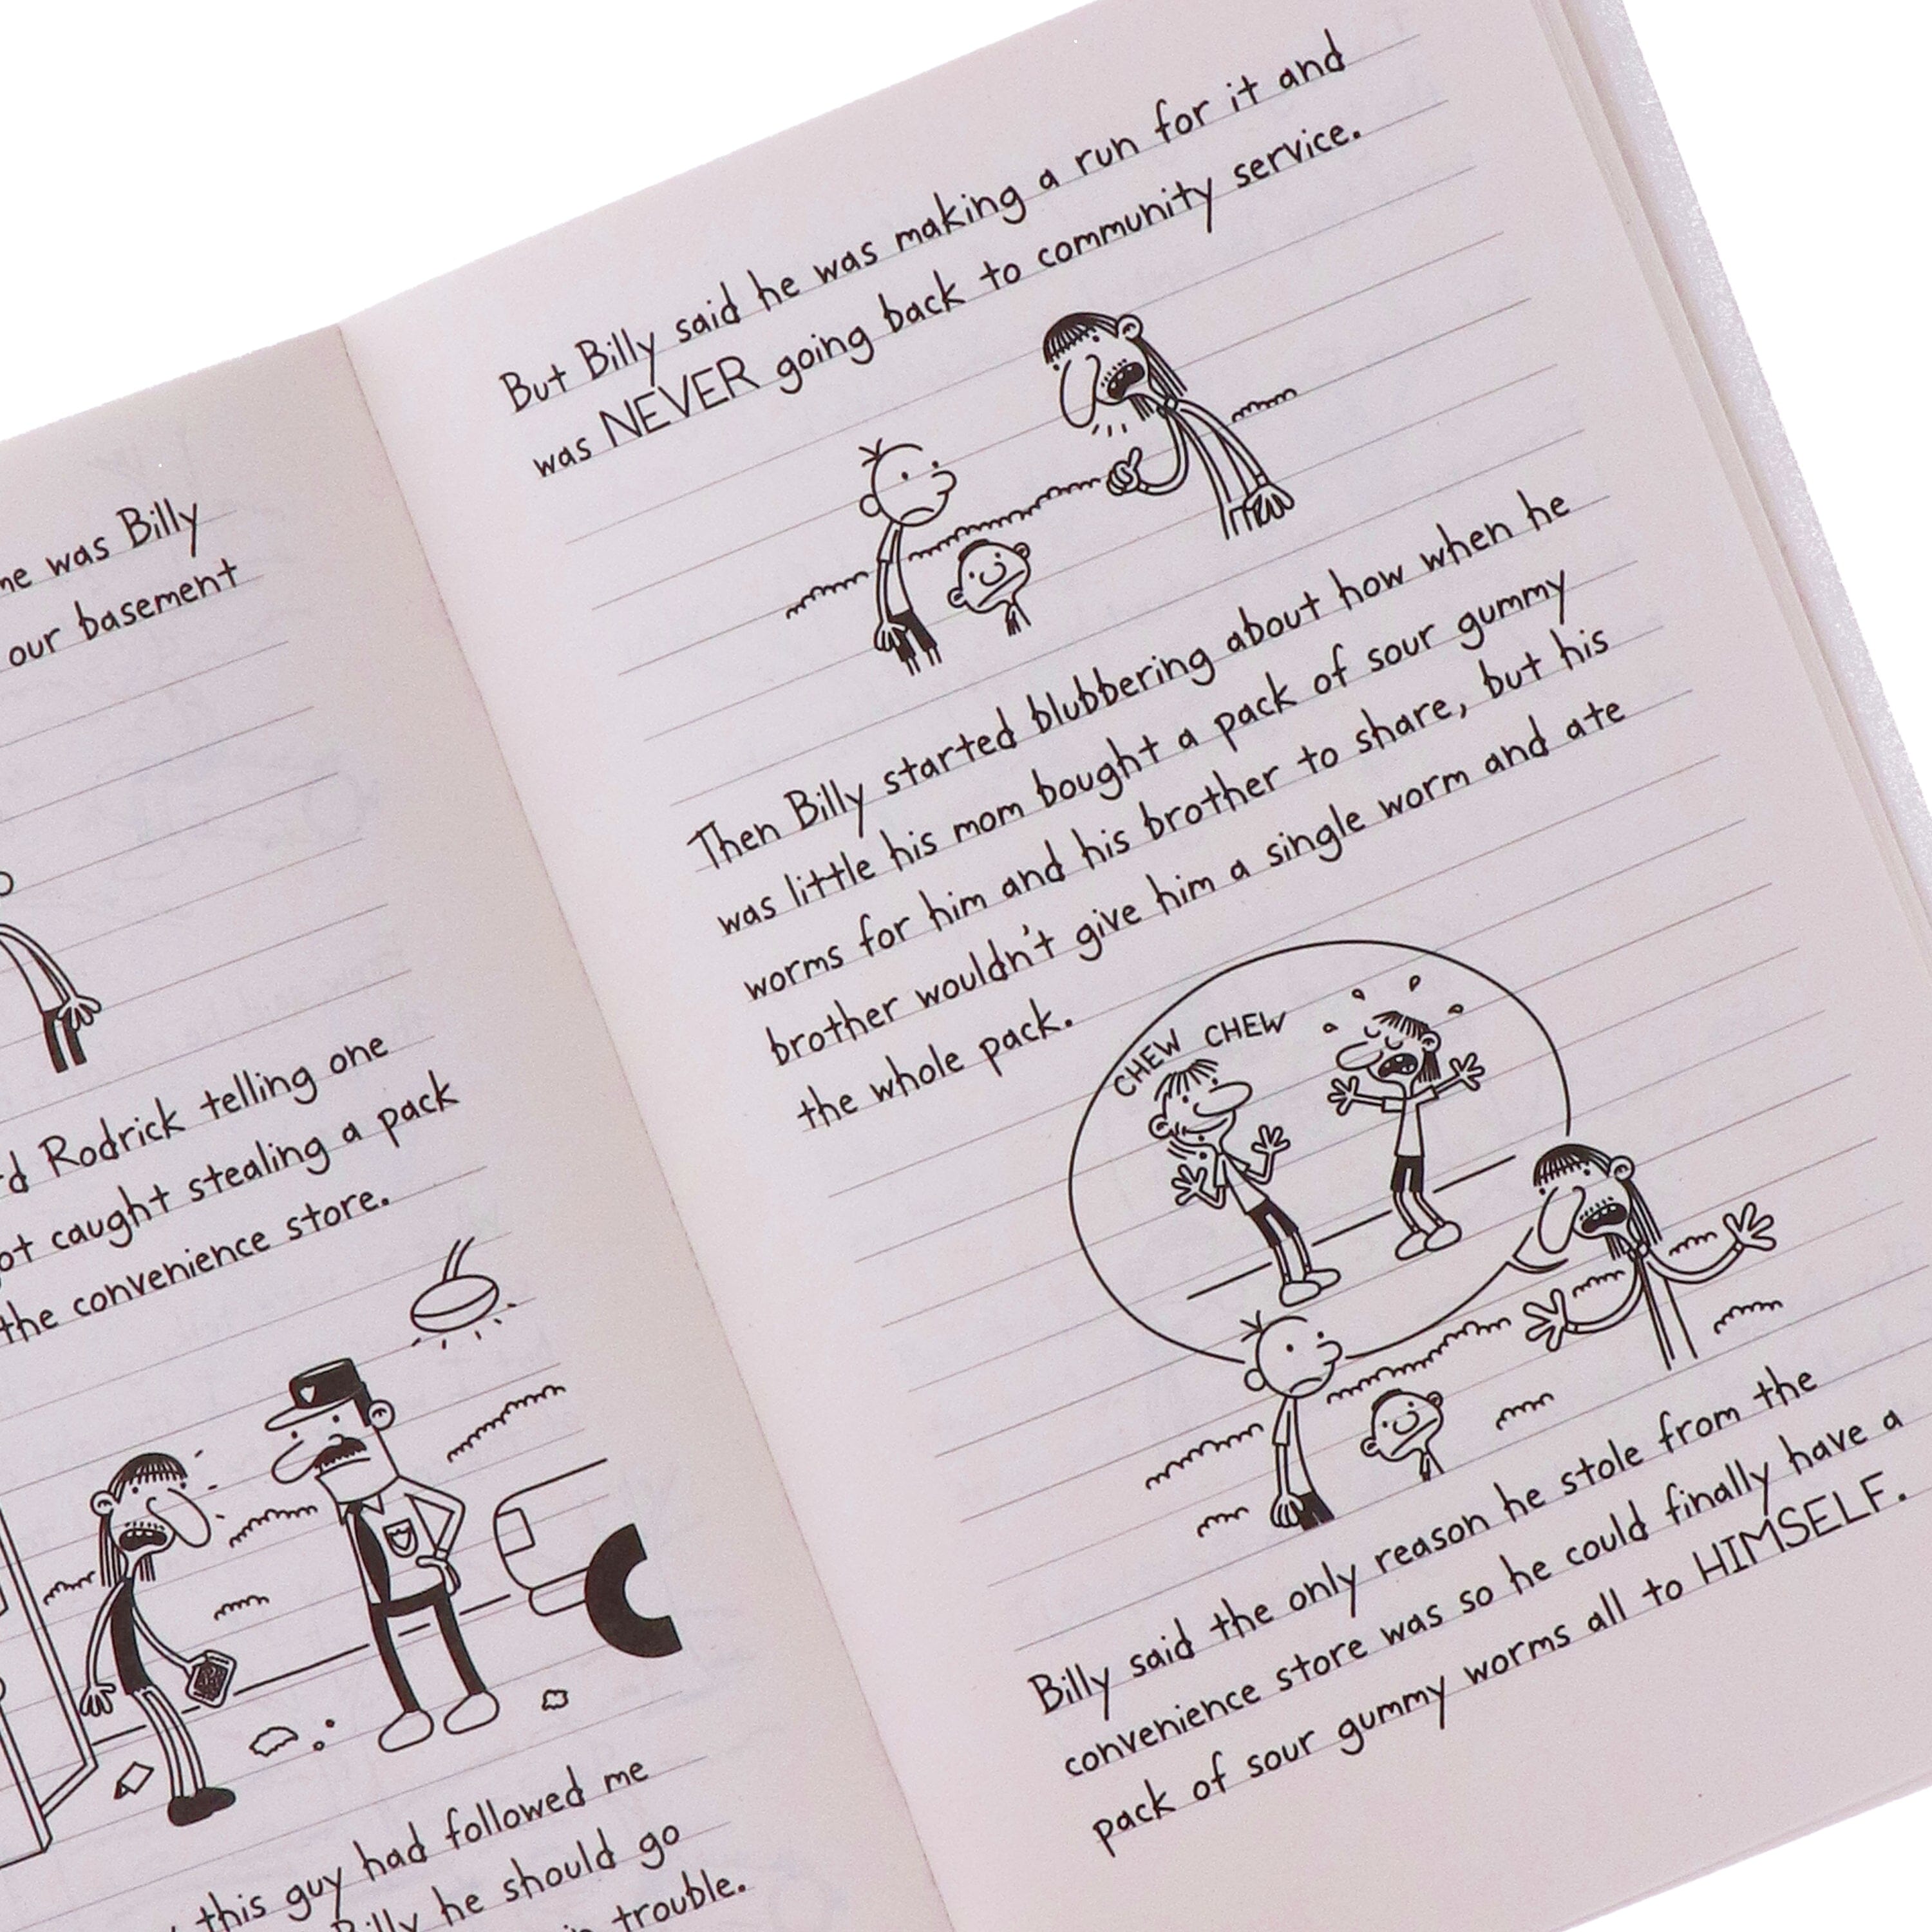 Diary of a Wimpy Kid - Box of Books - 12 book boxset –